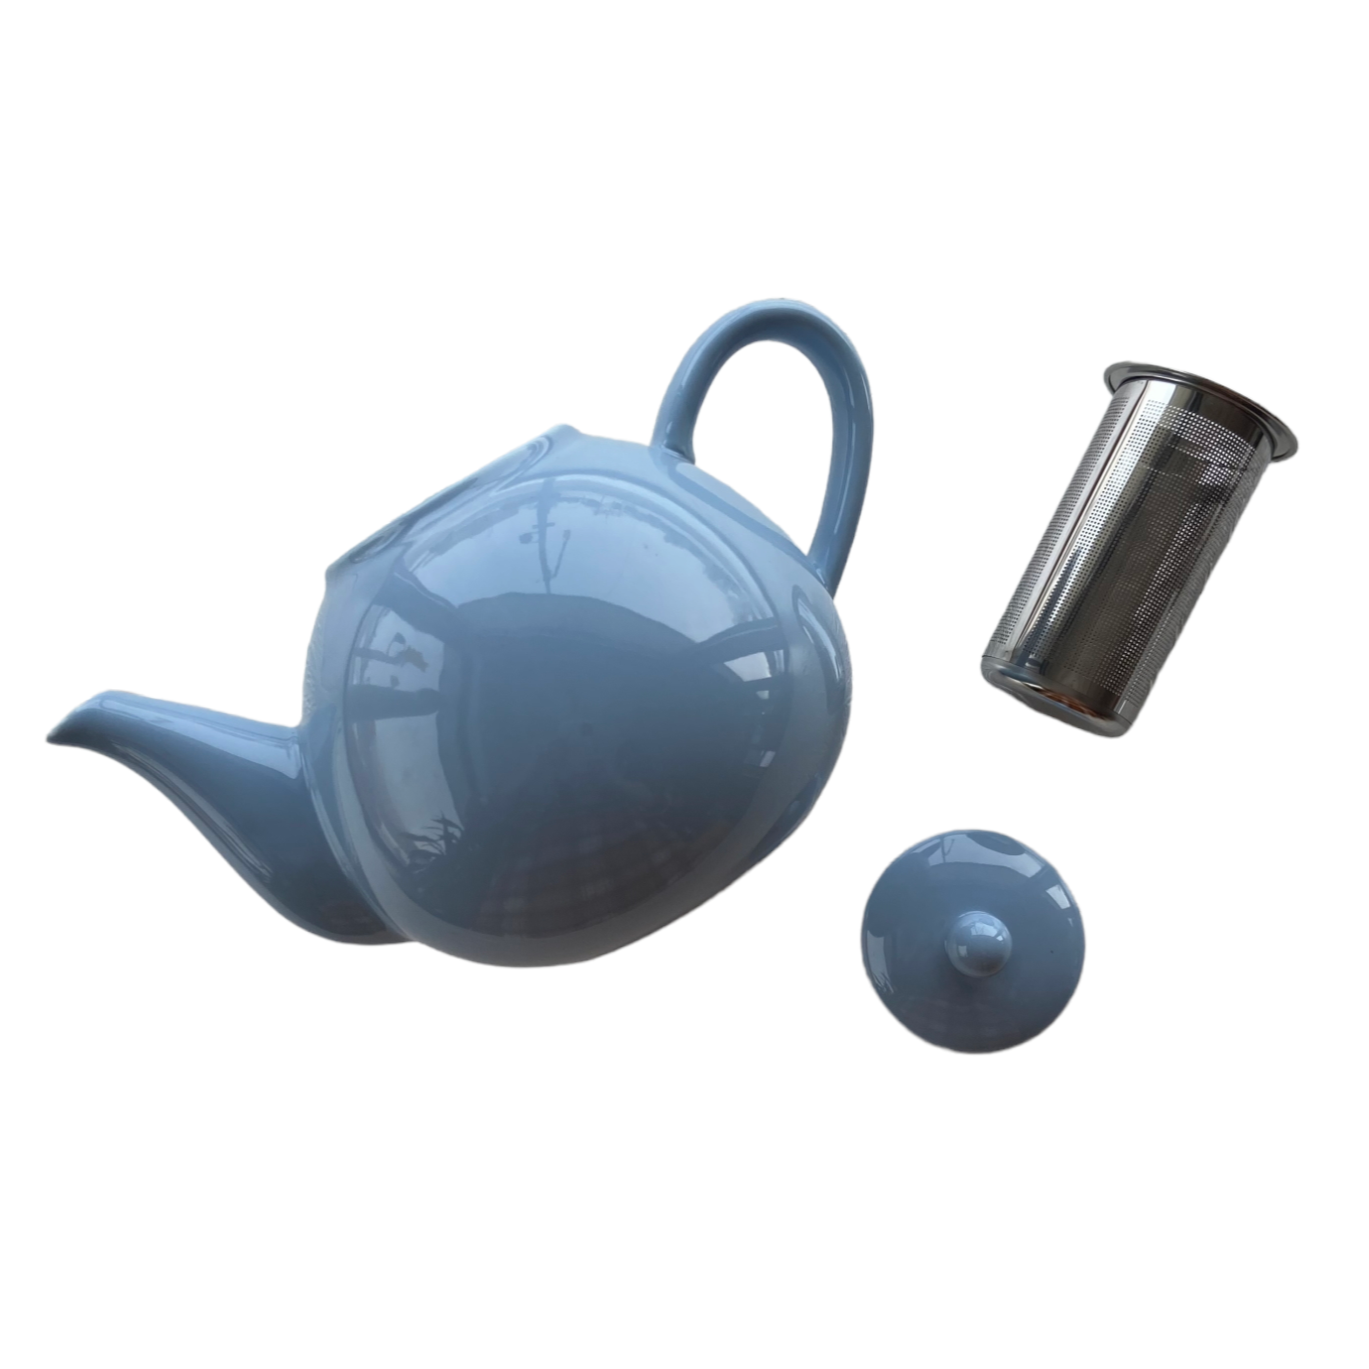 Classic Teapot 2